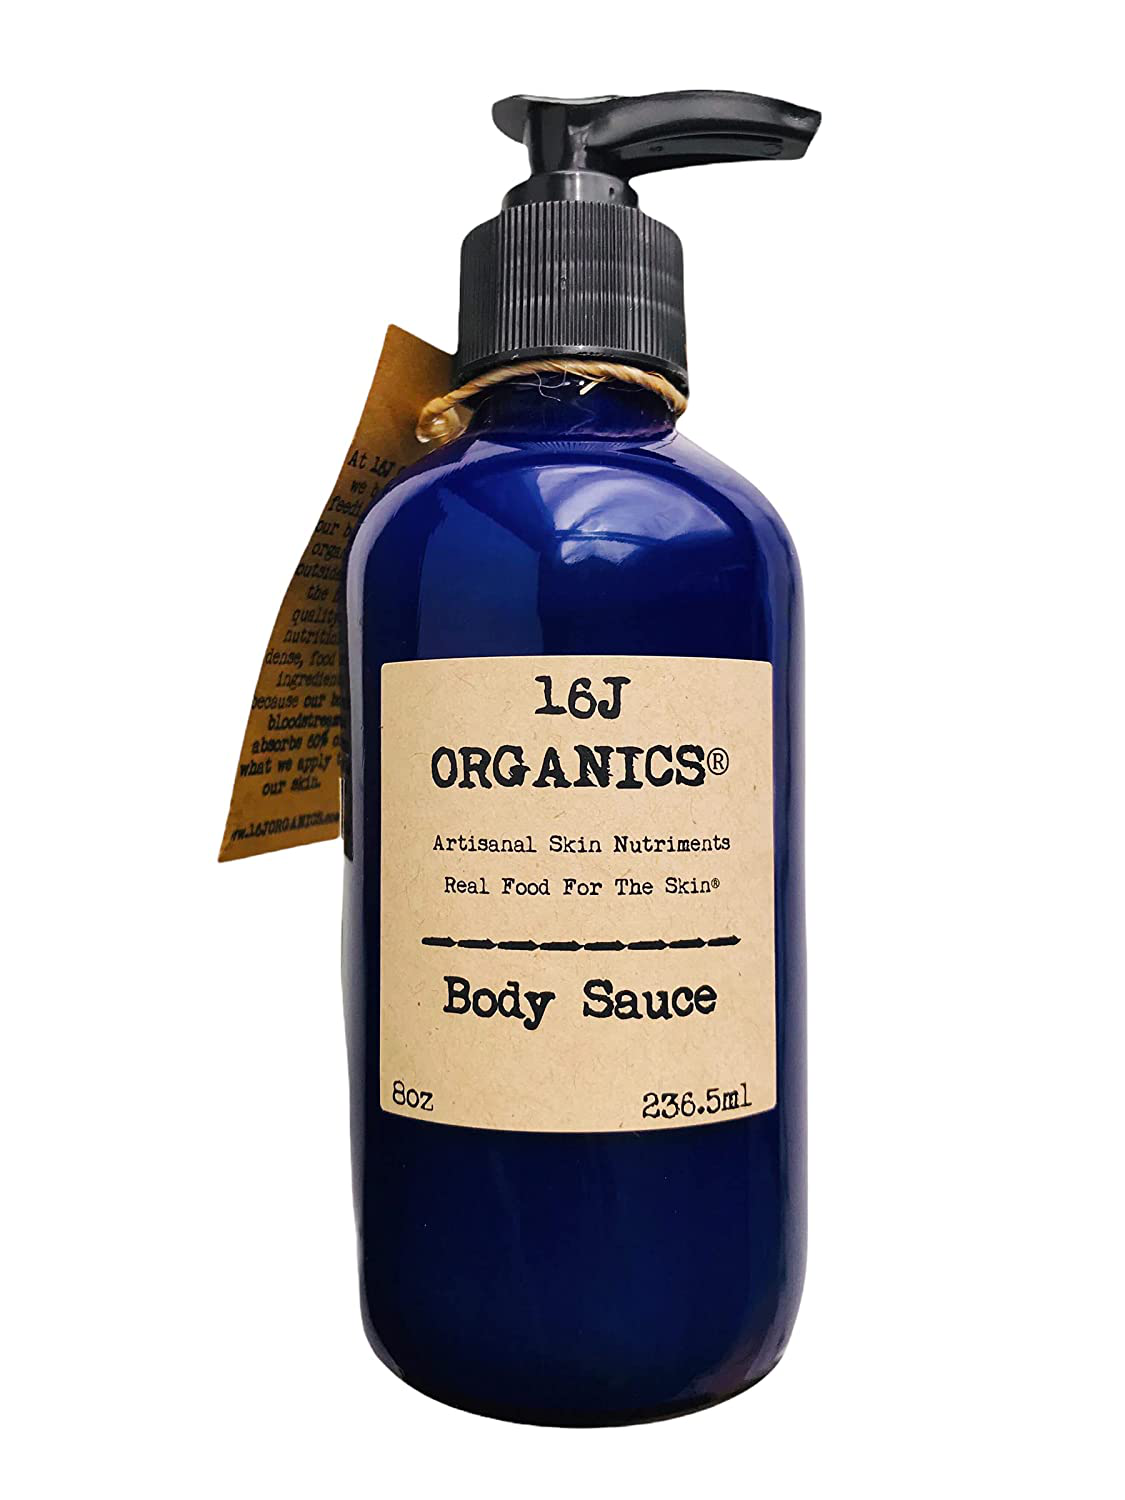 Creamy Body Oil Moisturizer - Body Sauce 8Oz - an Artisanal Green Treatment for Dry Skin - All Food Grade Ingredients